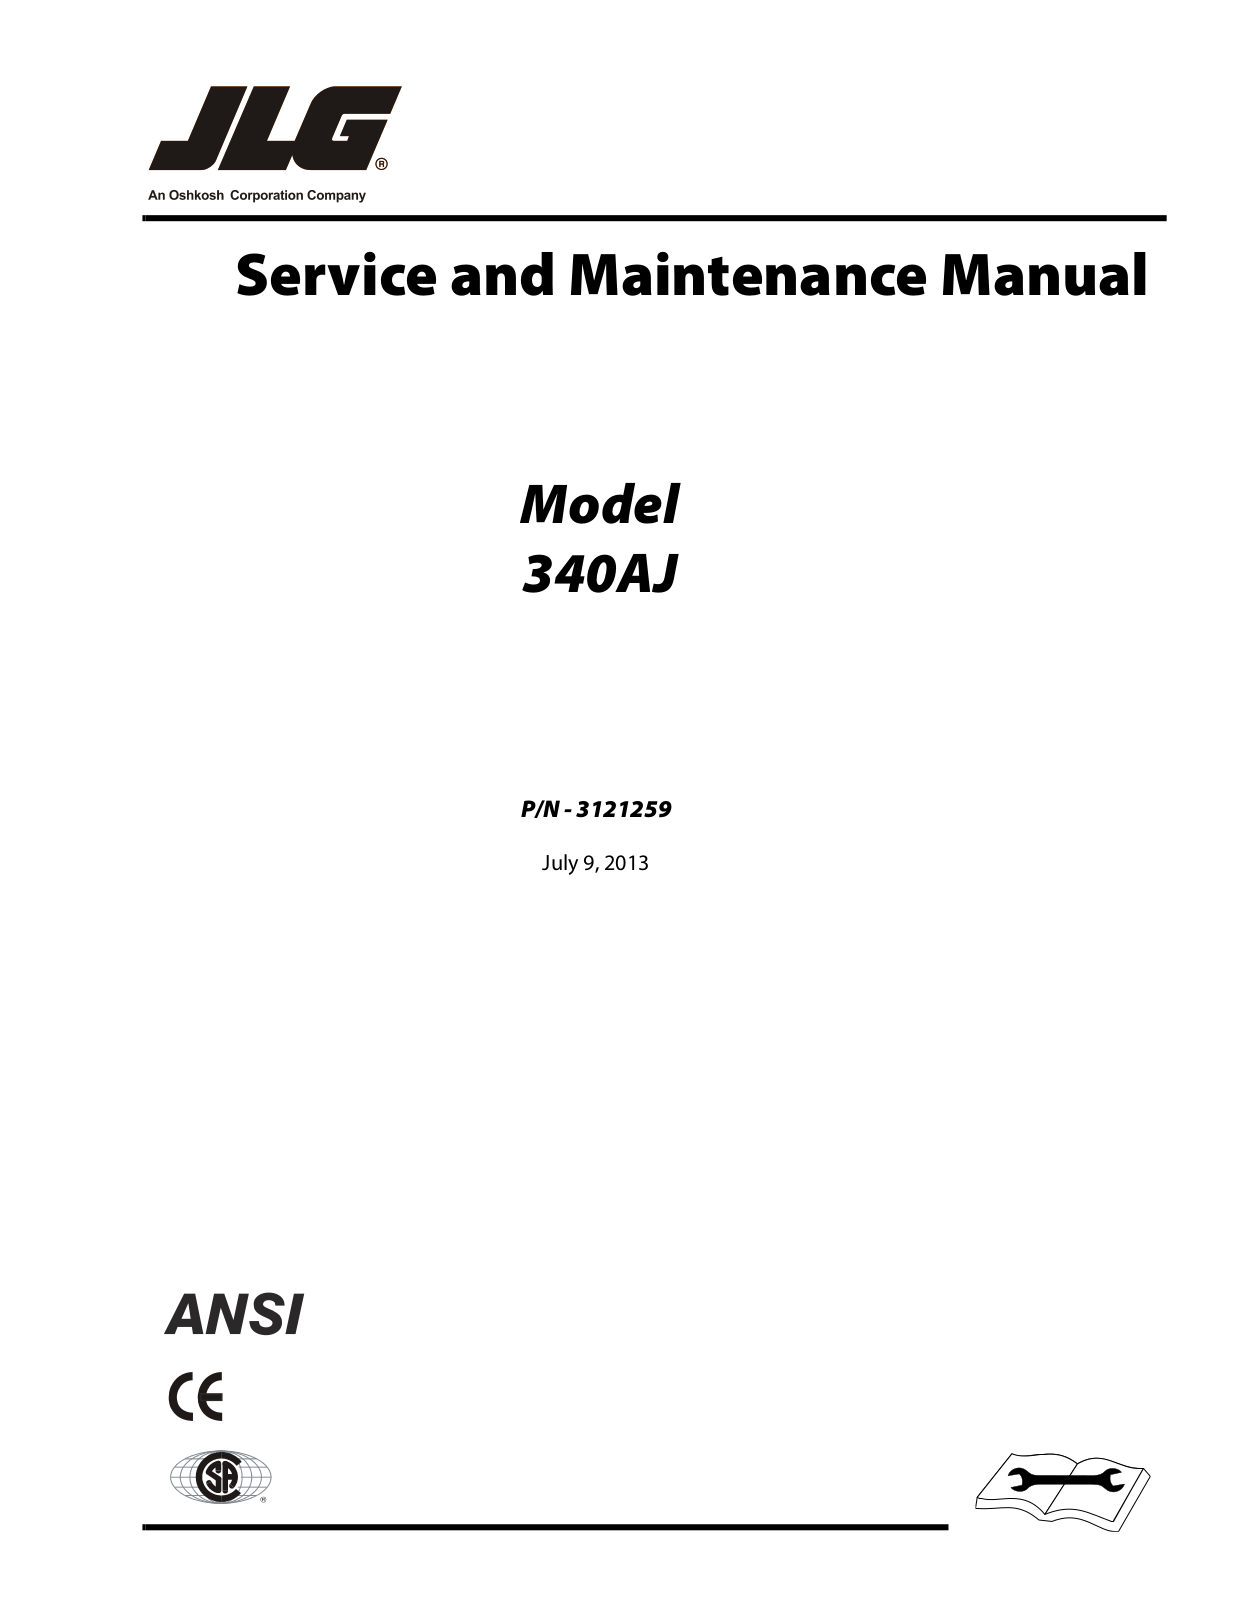 JLG 340AJ Service Manual